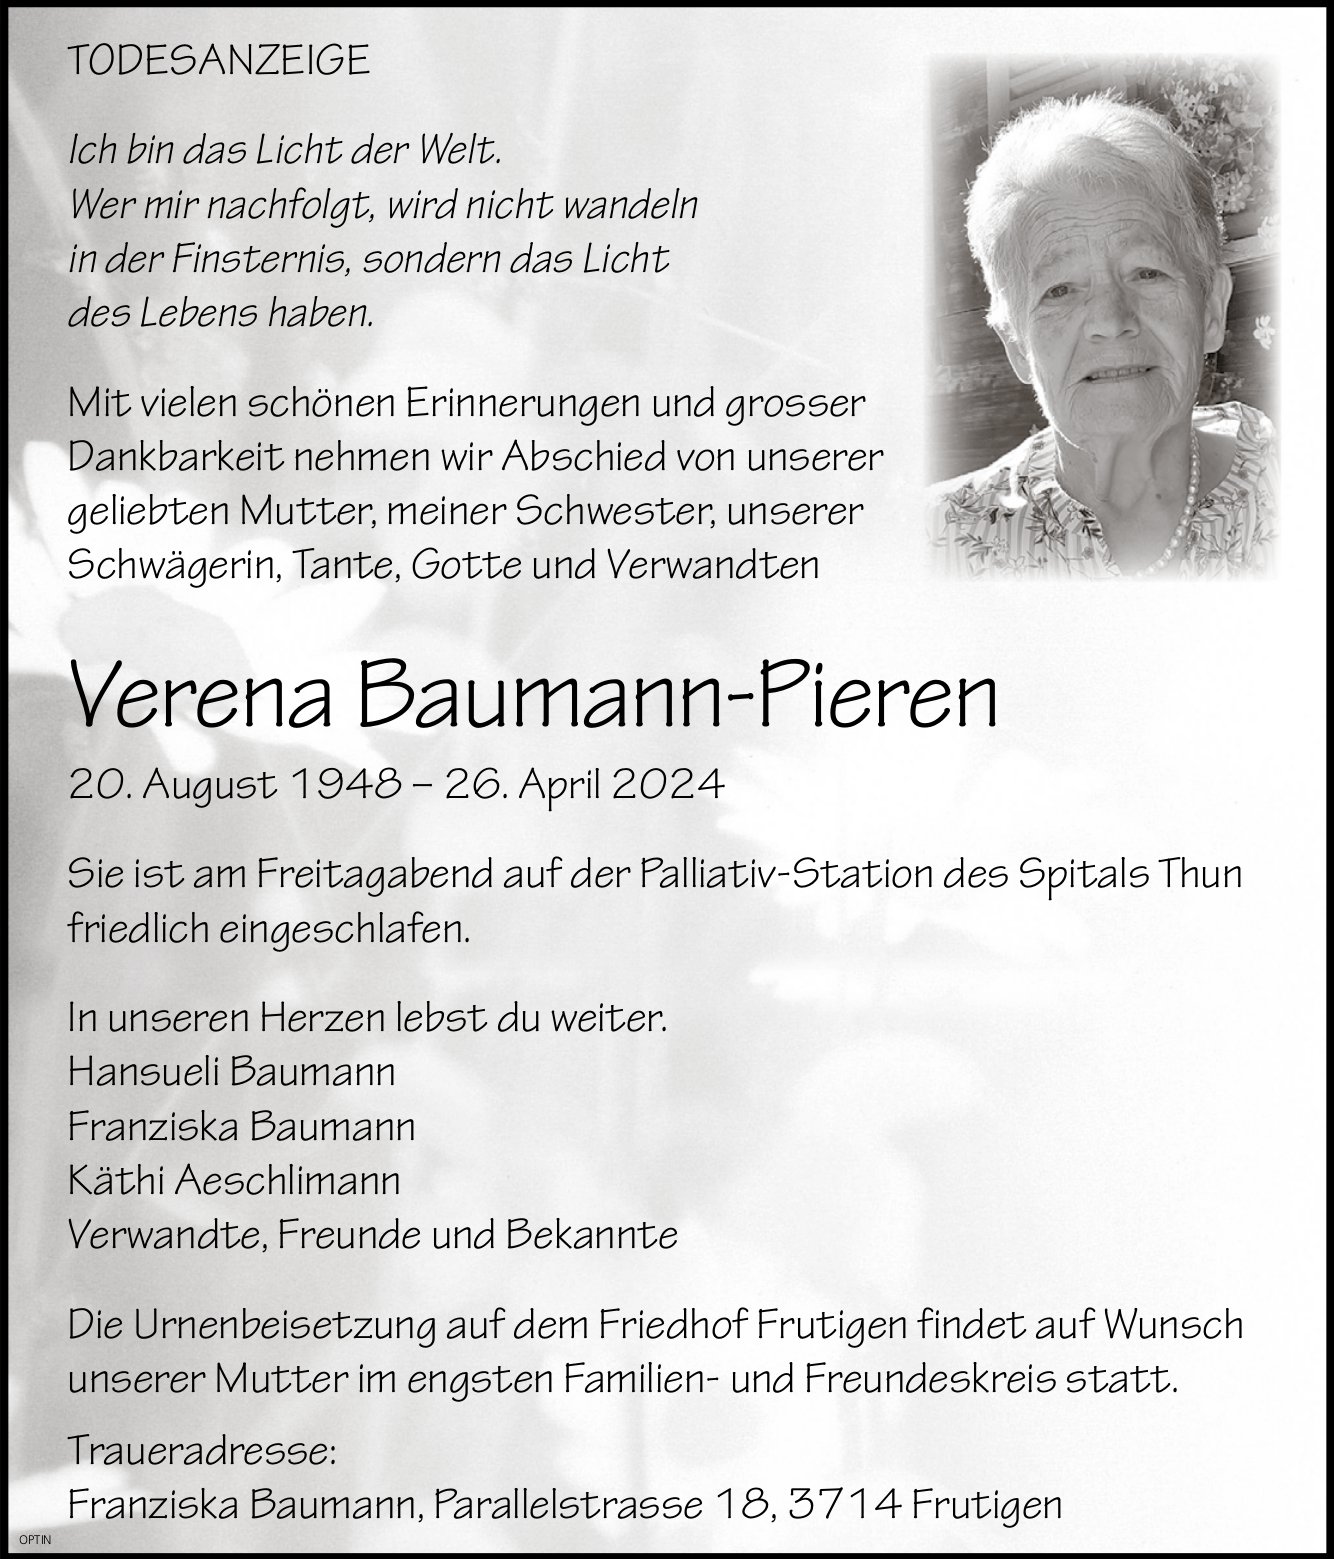 Verena Baumann-Pieren, April 2024 / TA